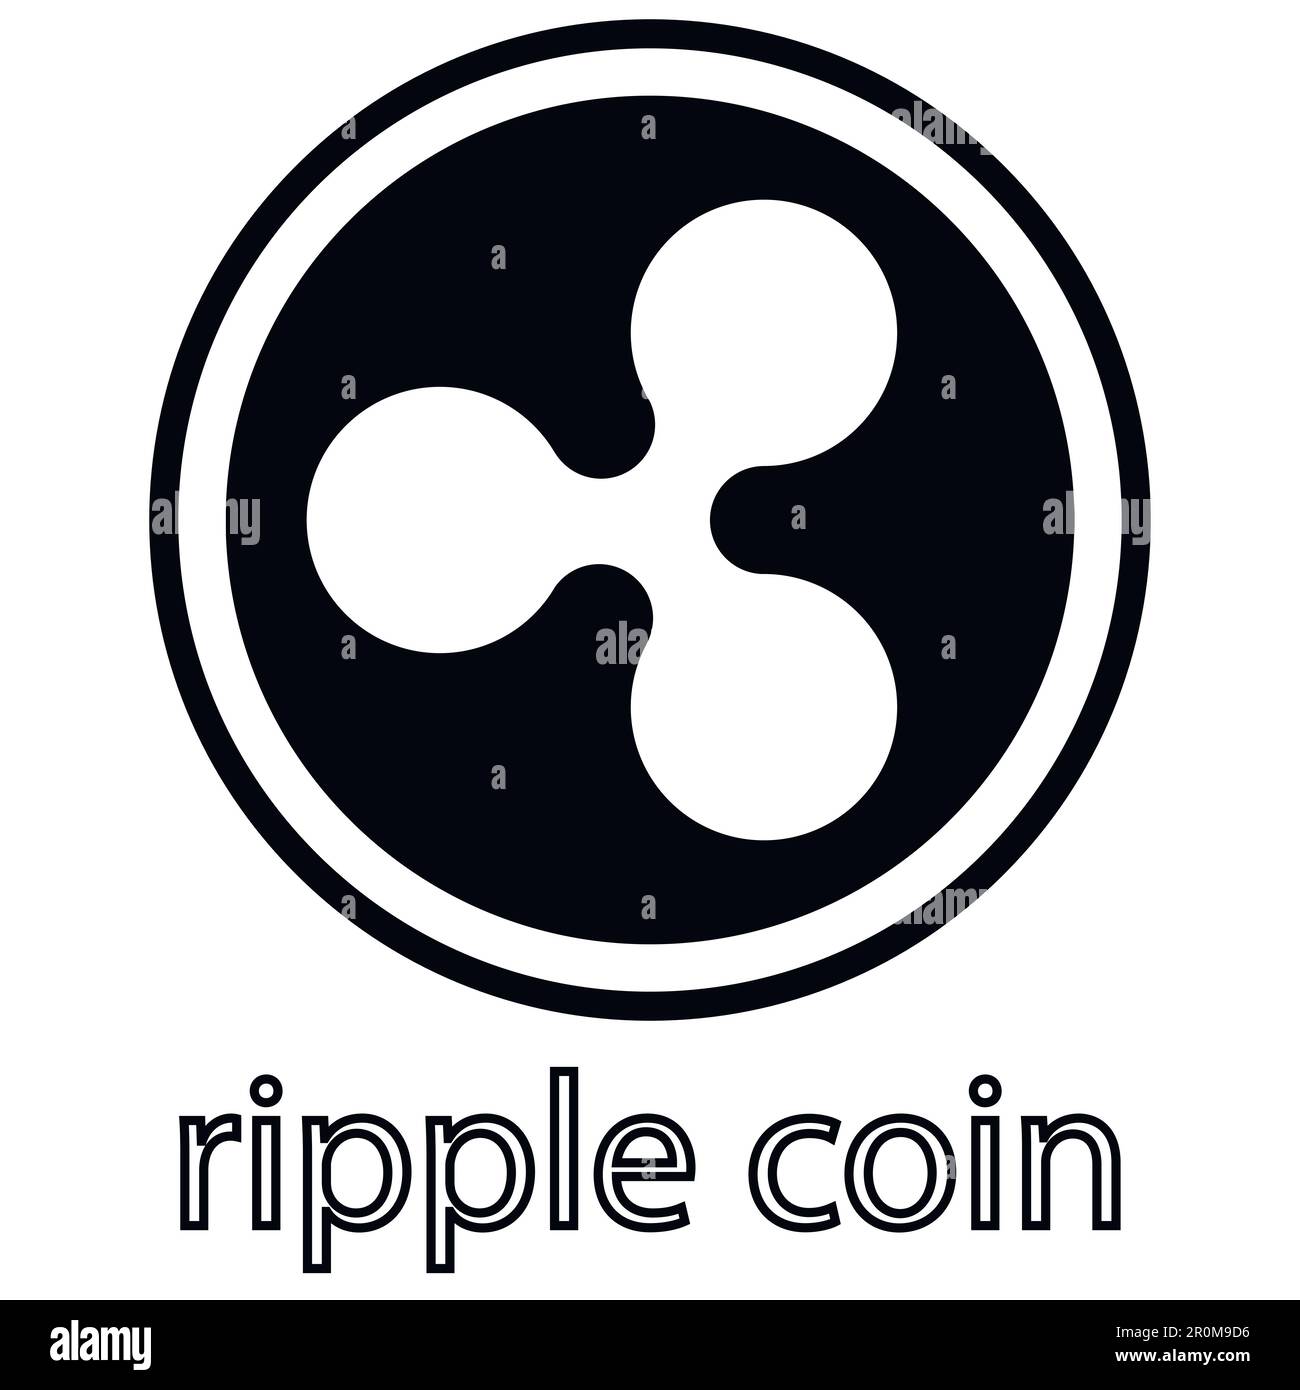 Ripple coin symbol, icon, sign, emblem. Vector Stock Vector